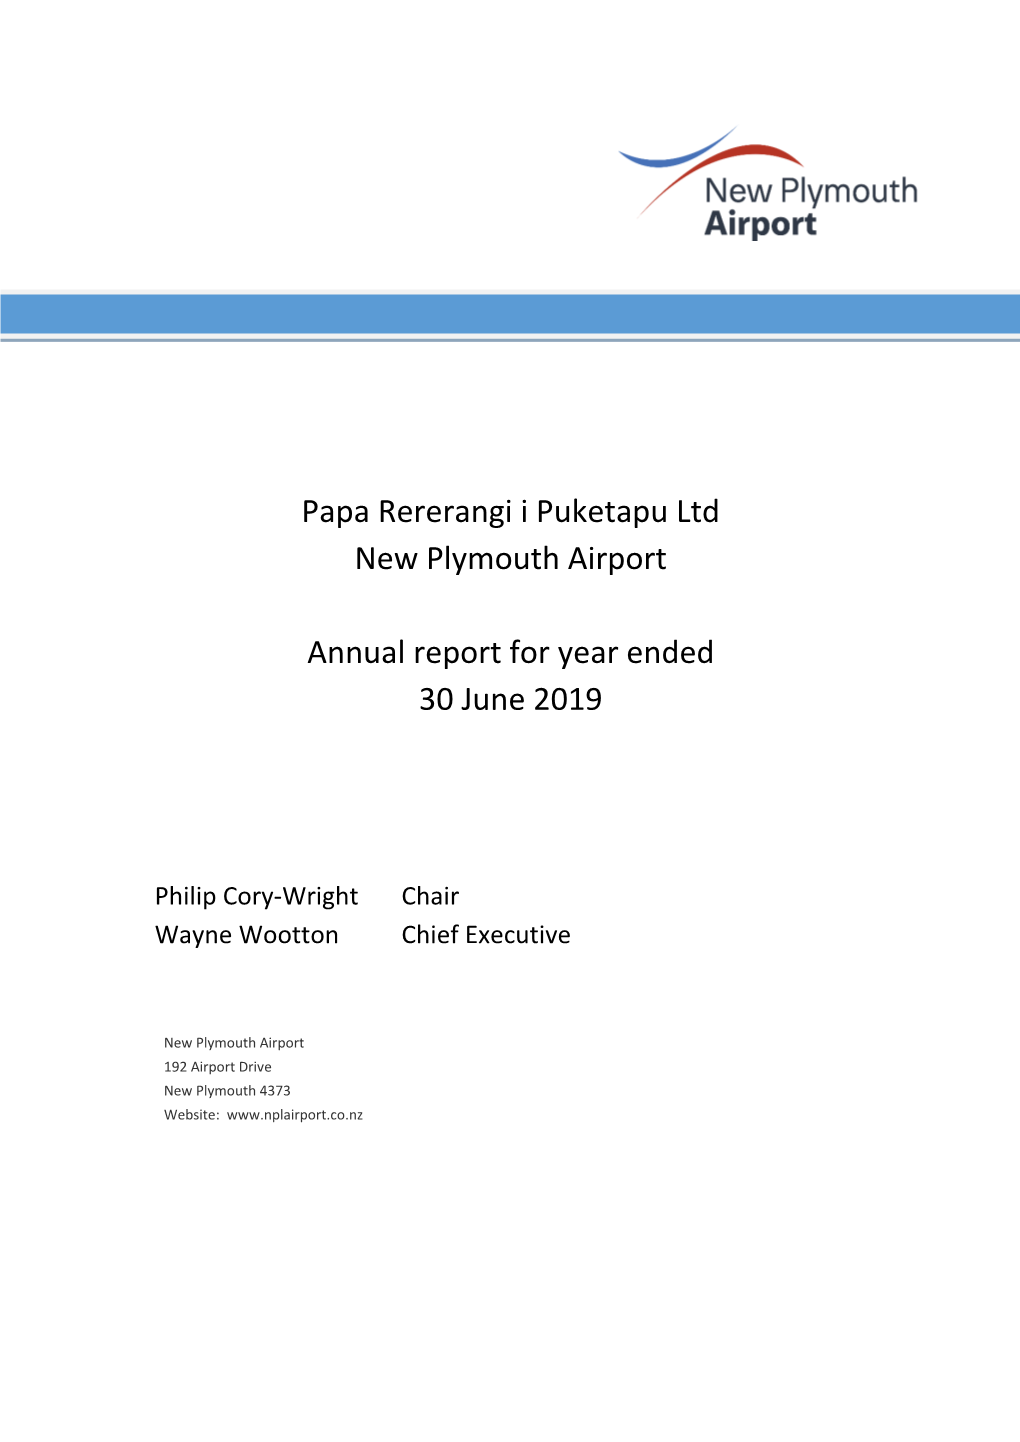 Papa Rererangi I Puketapu Ltd New Plymouth Airport Annual Report For